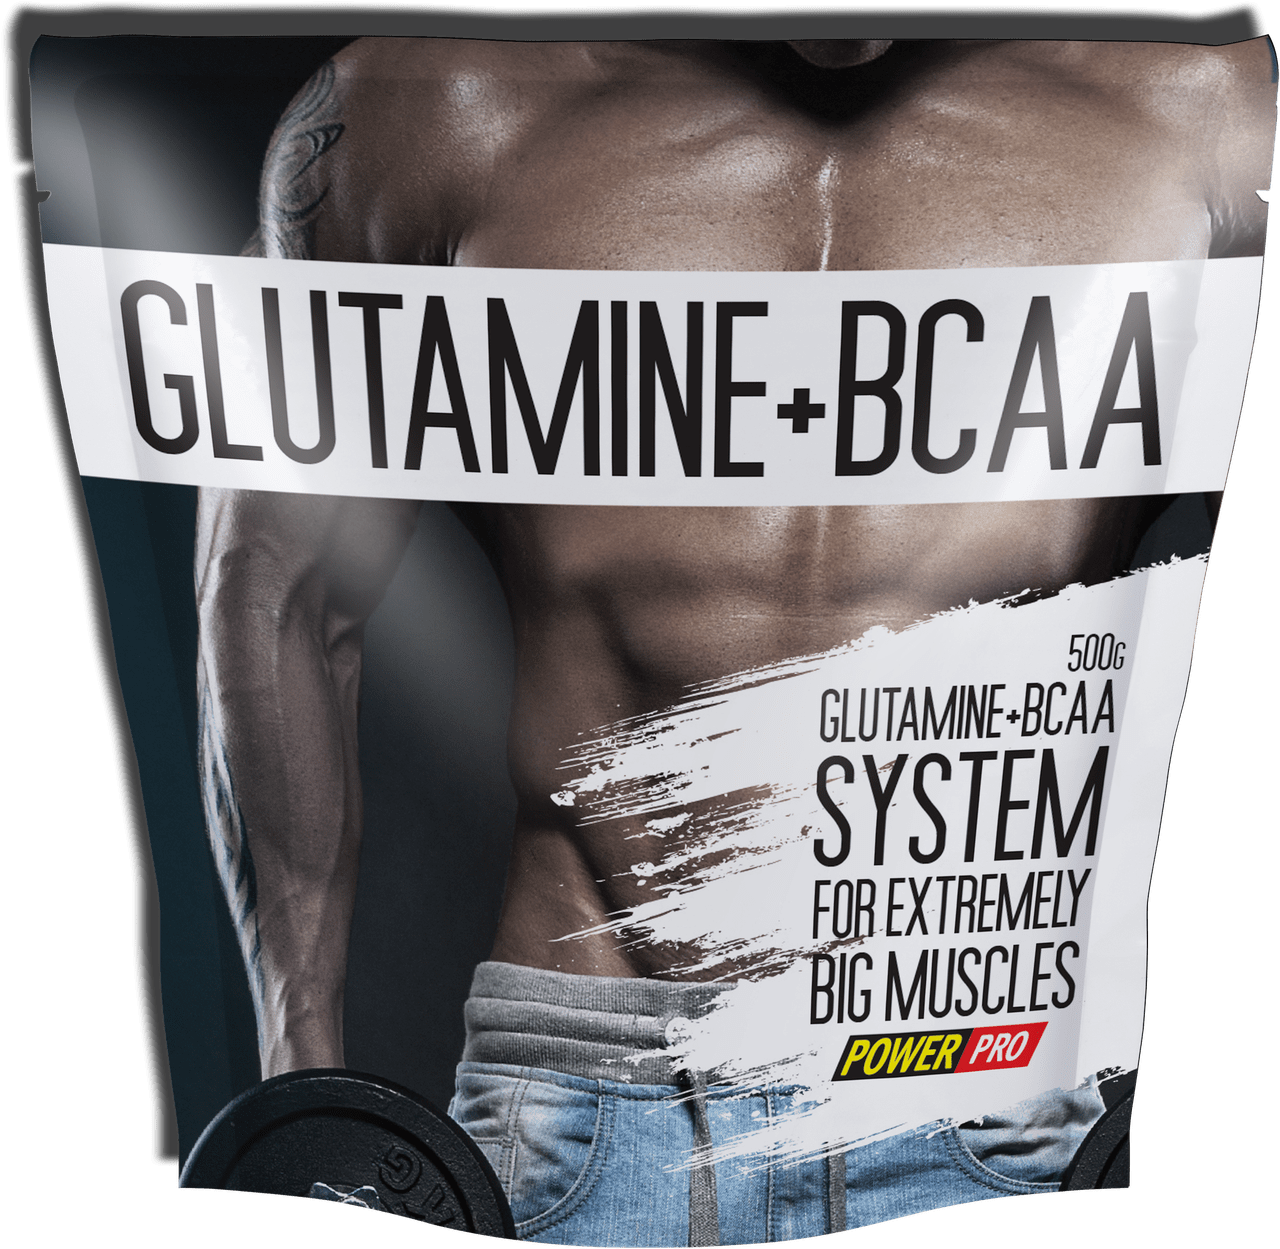 Glutamine + BCAA Power Pro 500 g,  ml, Power Pro. BCAA. Weight Loss recovery Anti-catabolic properties Lean muscle mass 